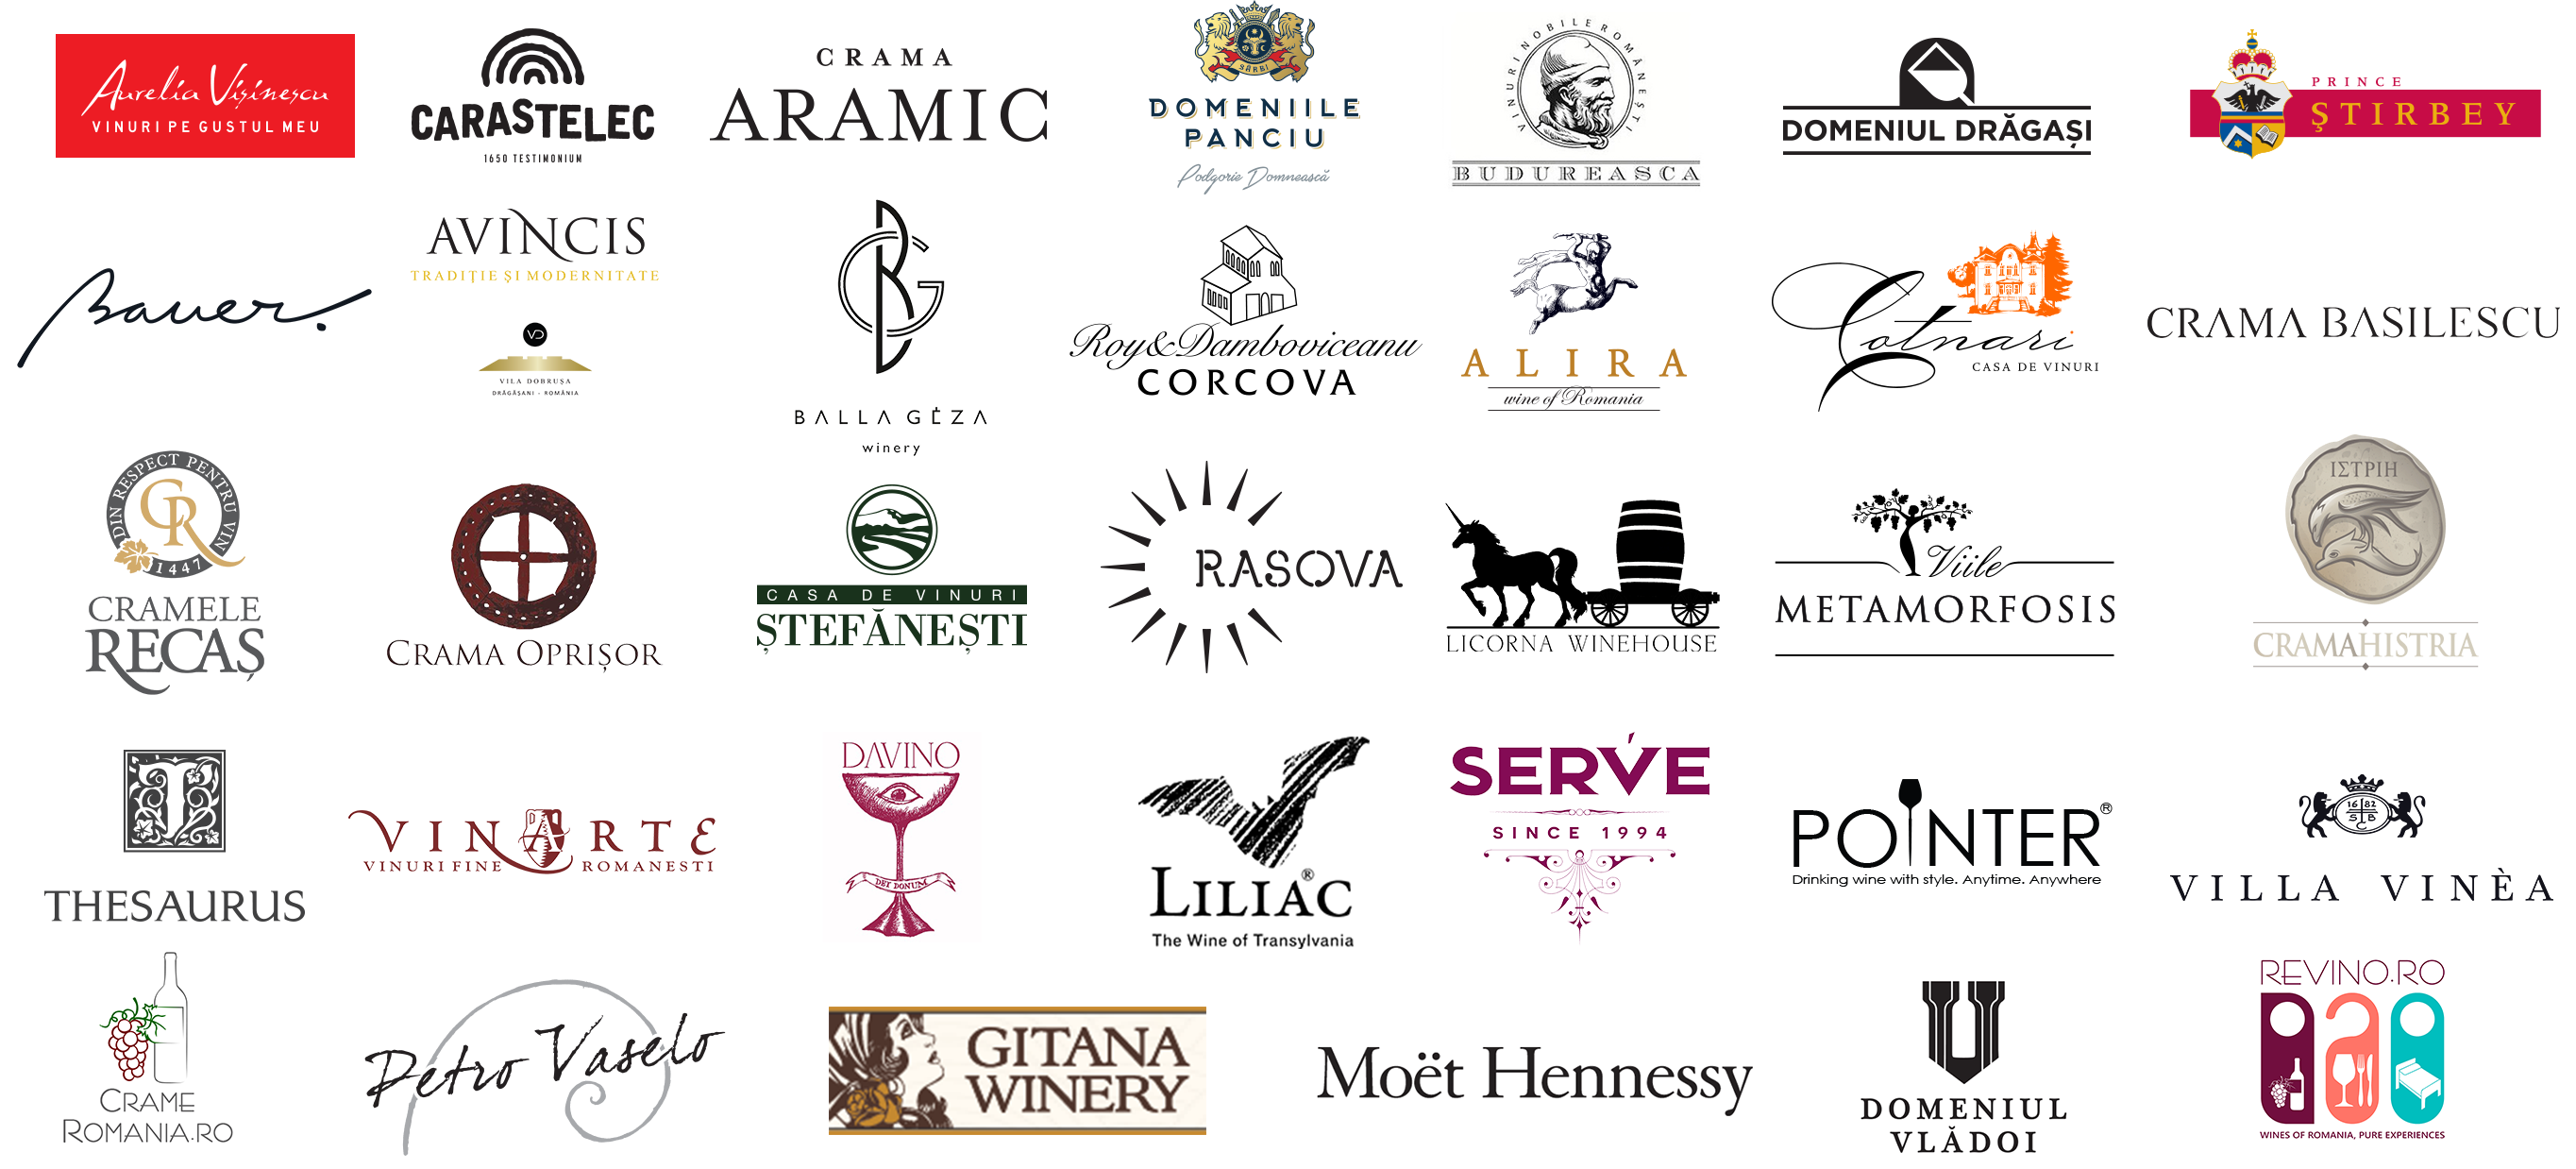 Expozanti ReVino Wine Fair 2017 Logo